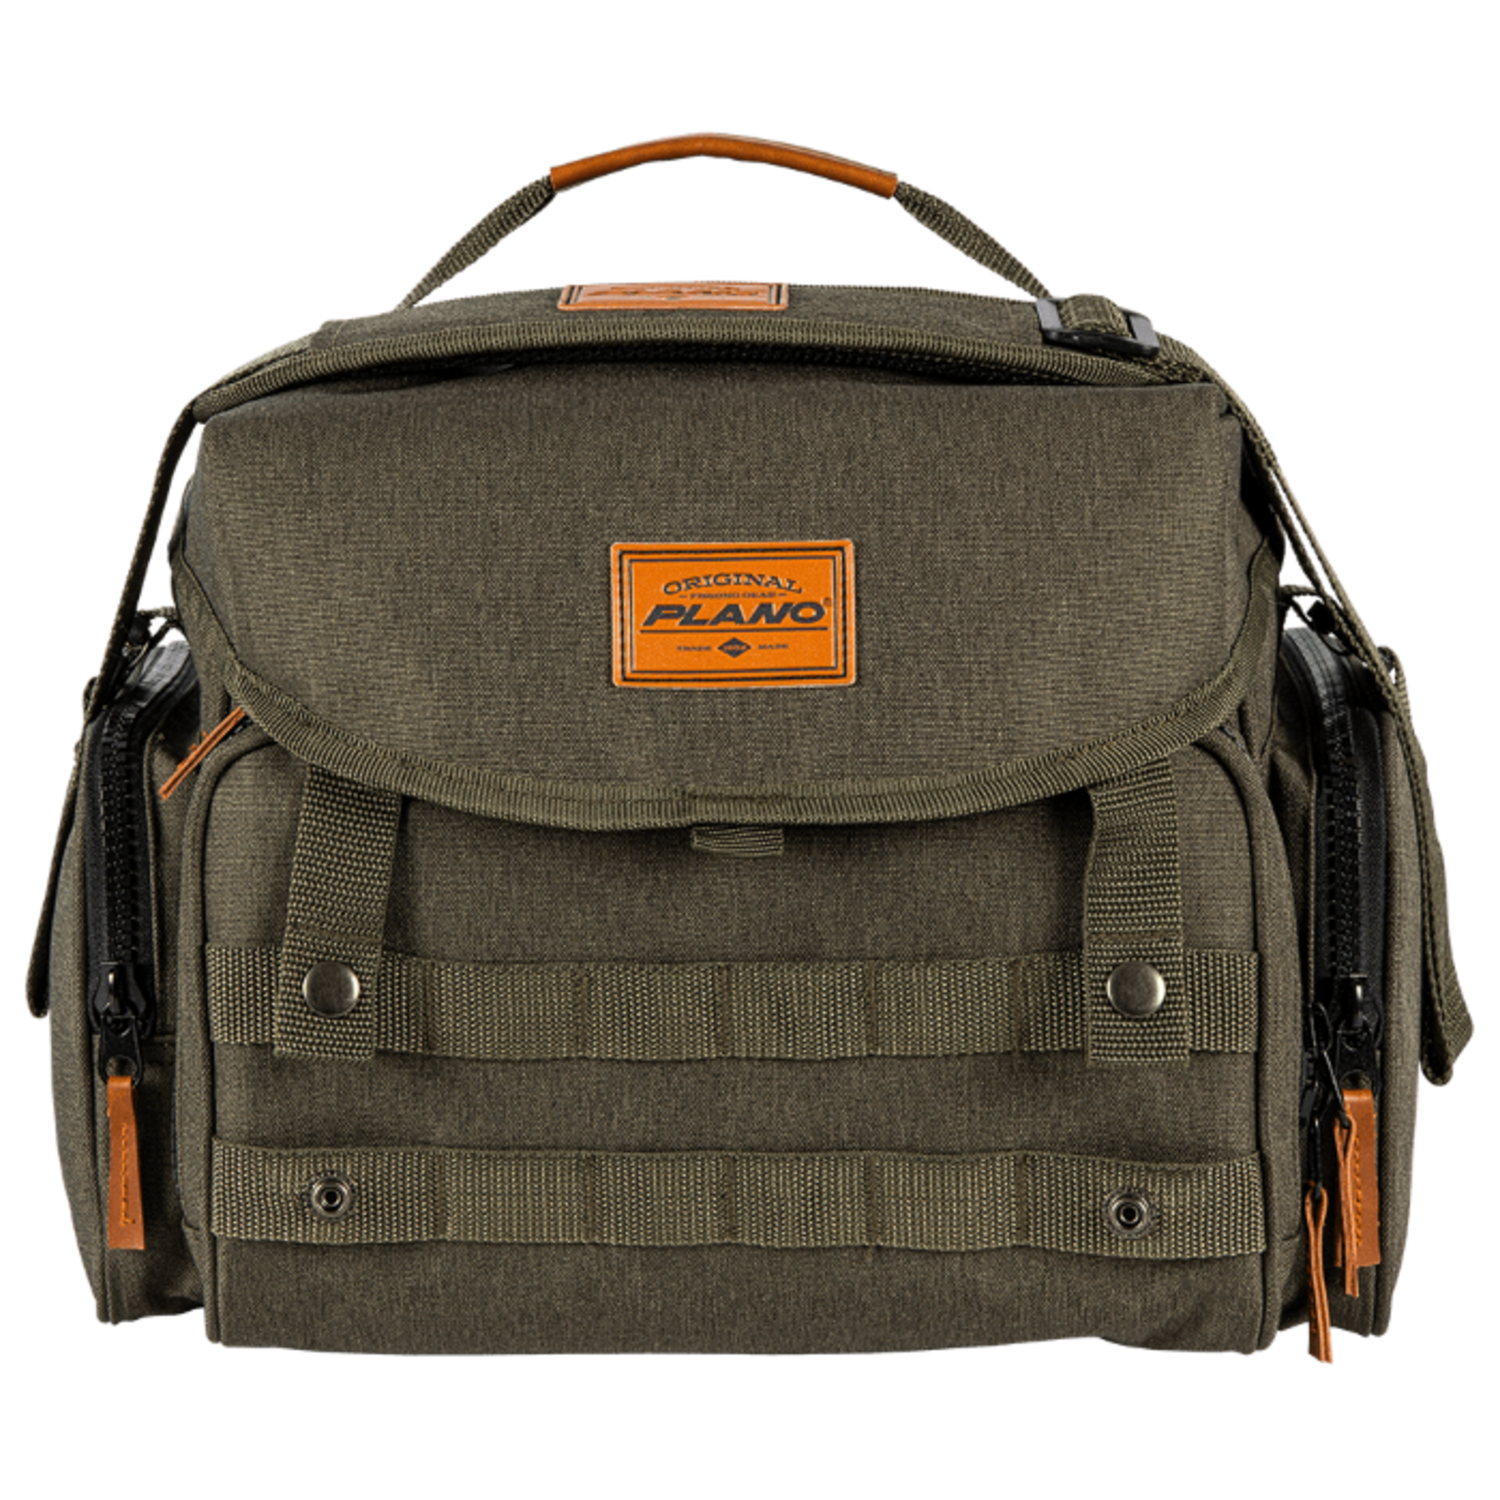 Plano A Series 2.0 Tackle Bag 3600 Size - Fin-atics Marine Supply